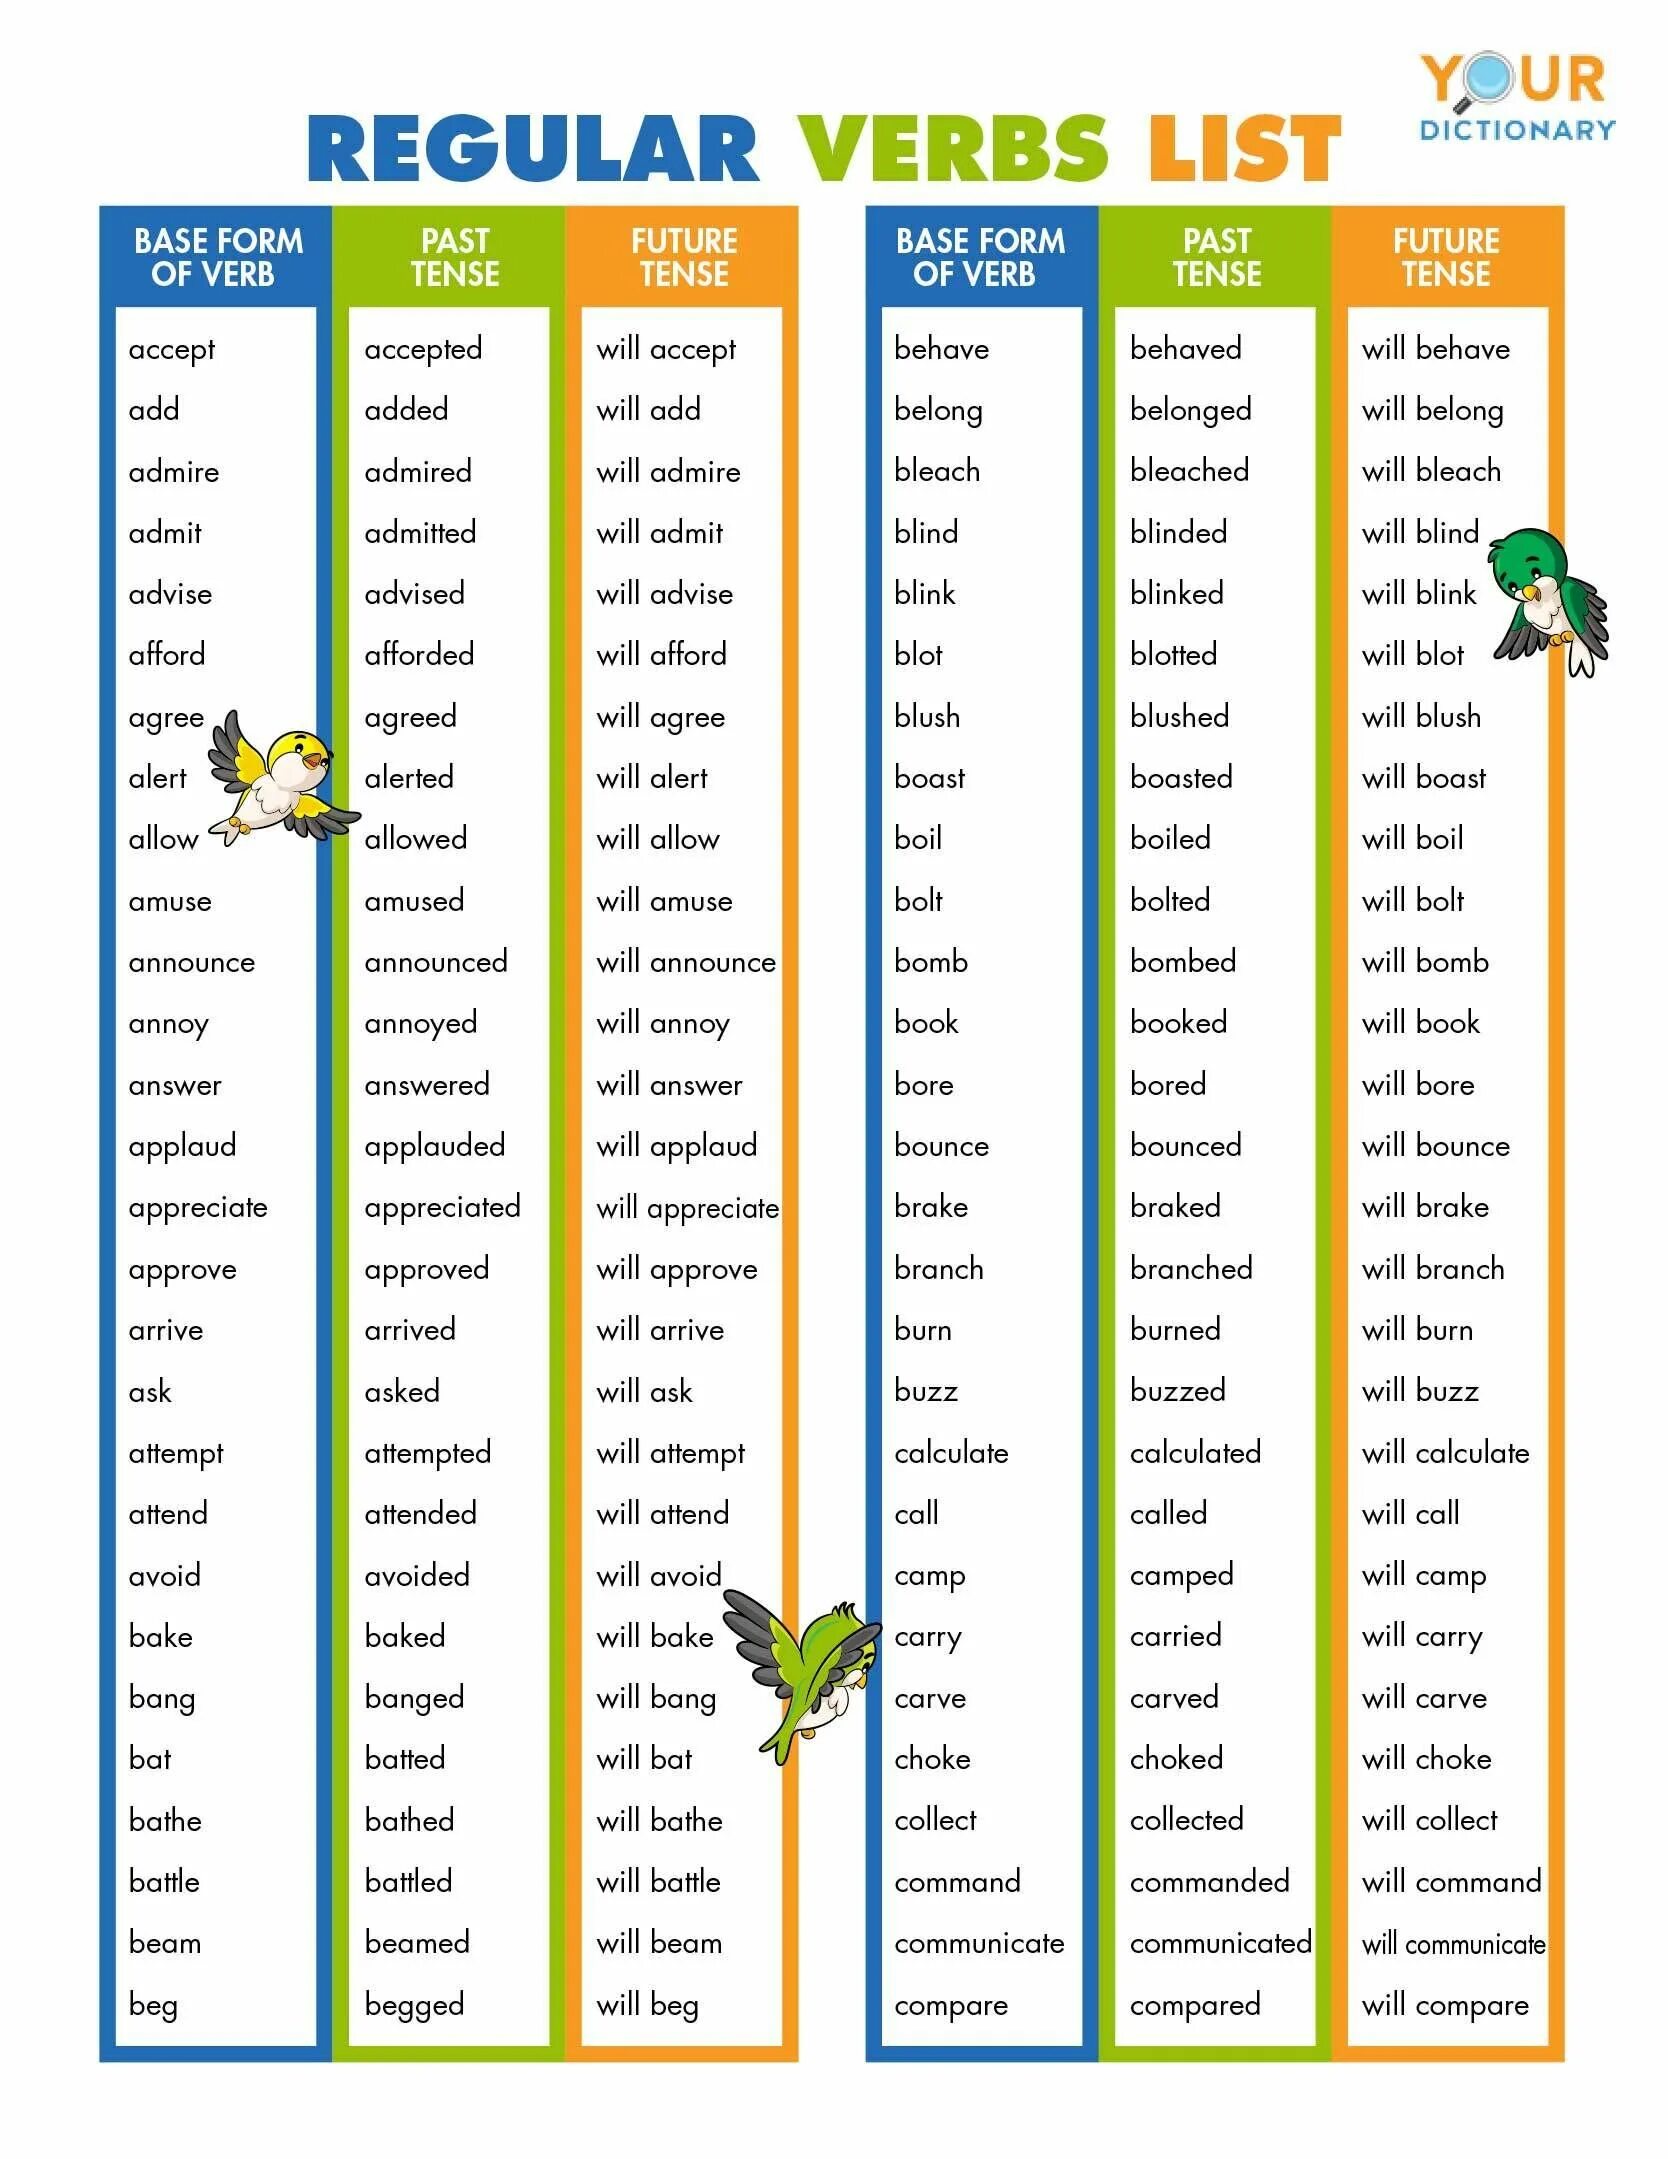 Verbs forms in past класс. Past simple Irregular verbs list. Common Irregular verbs таблица. Regular verbs Irregular verbs таблица. Regular verbs список.